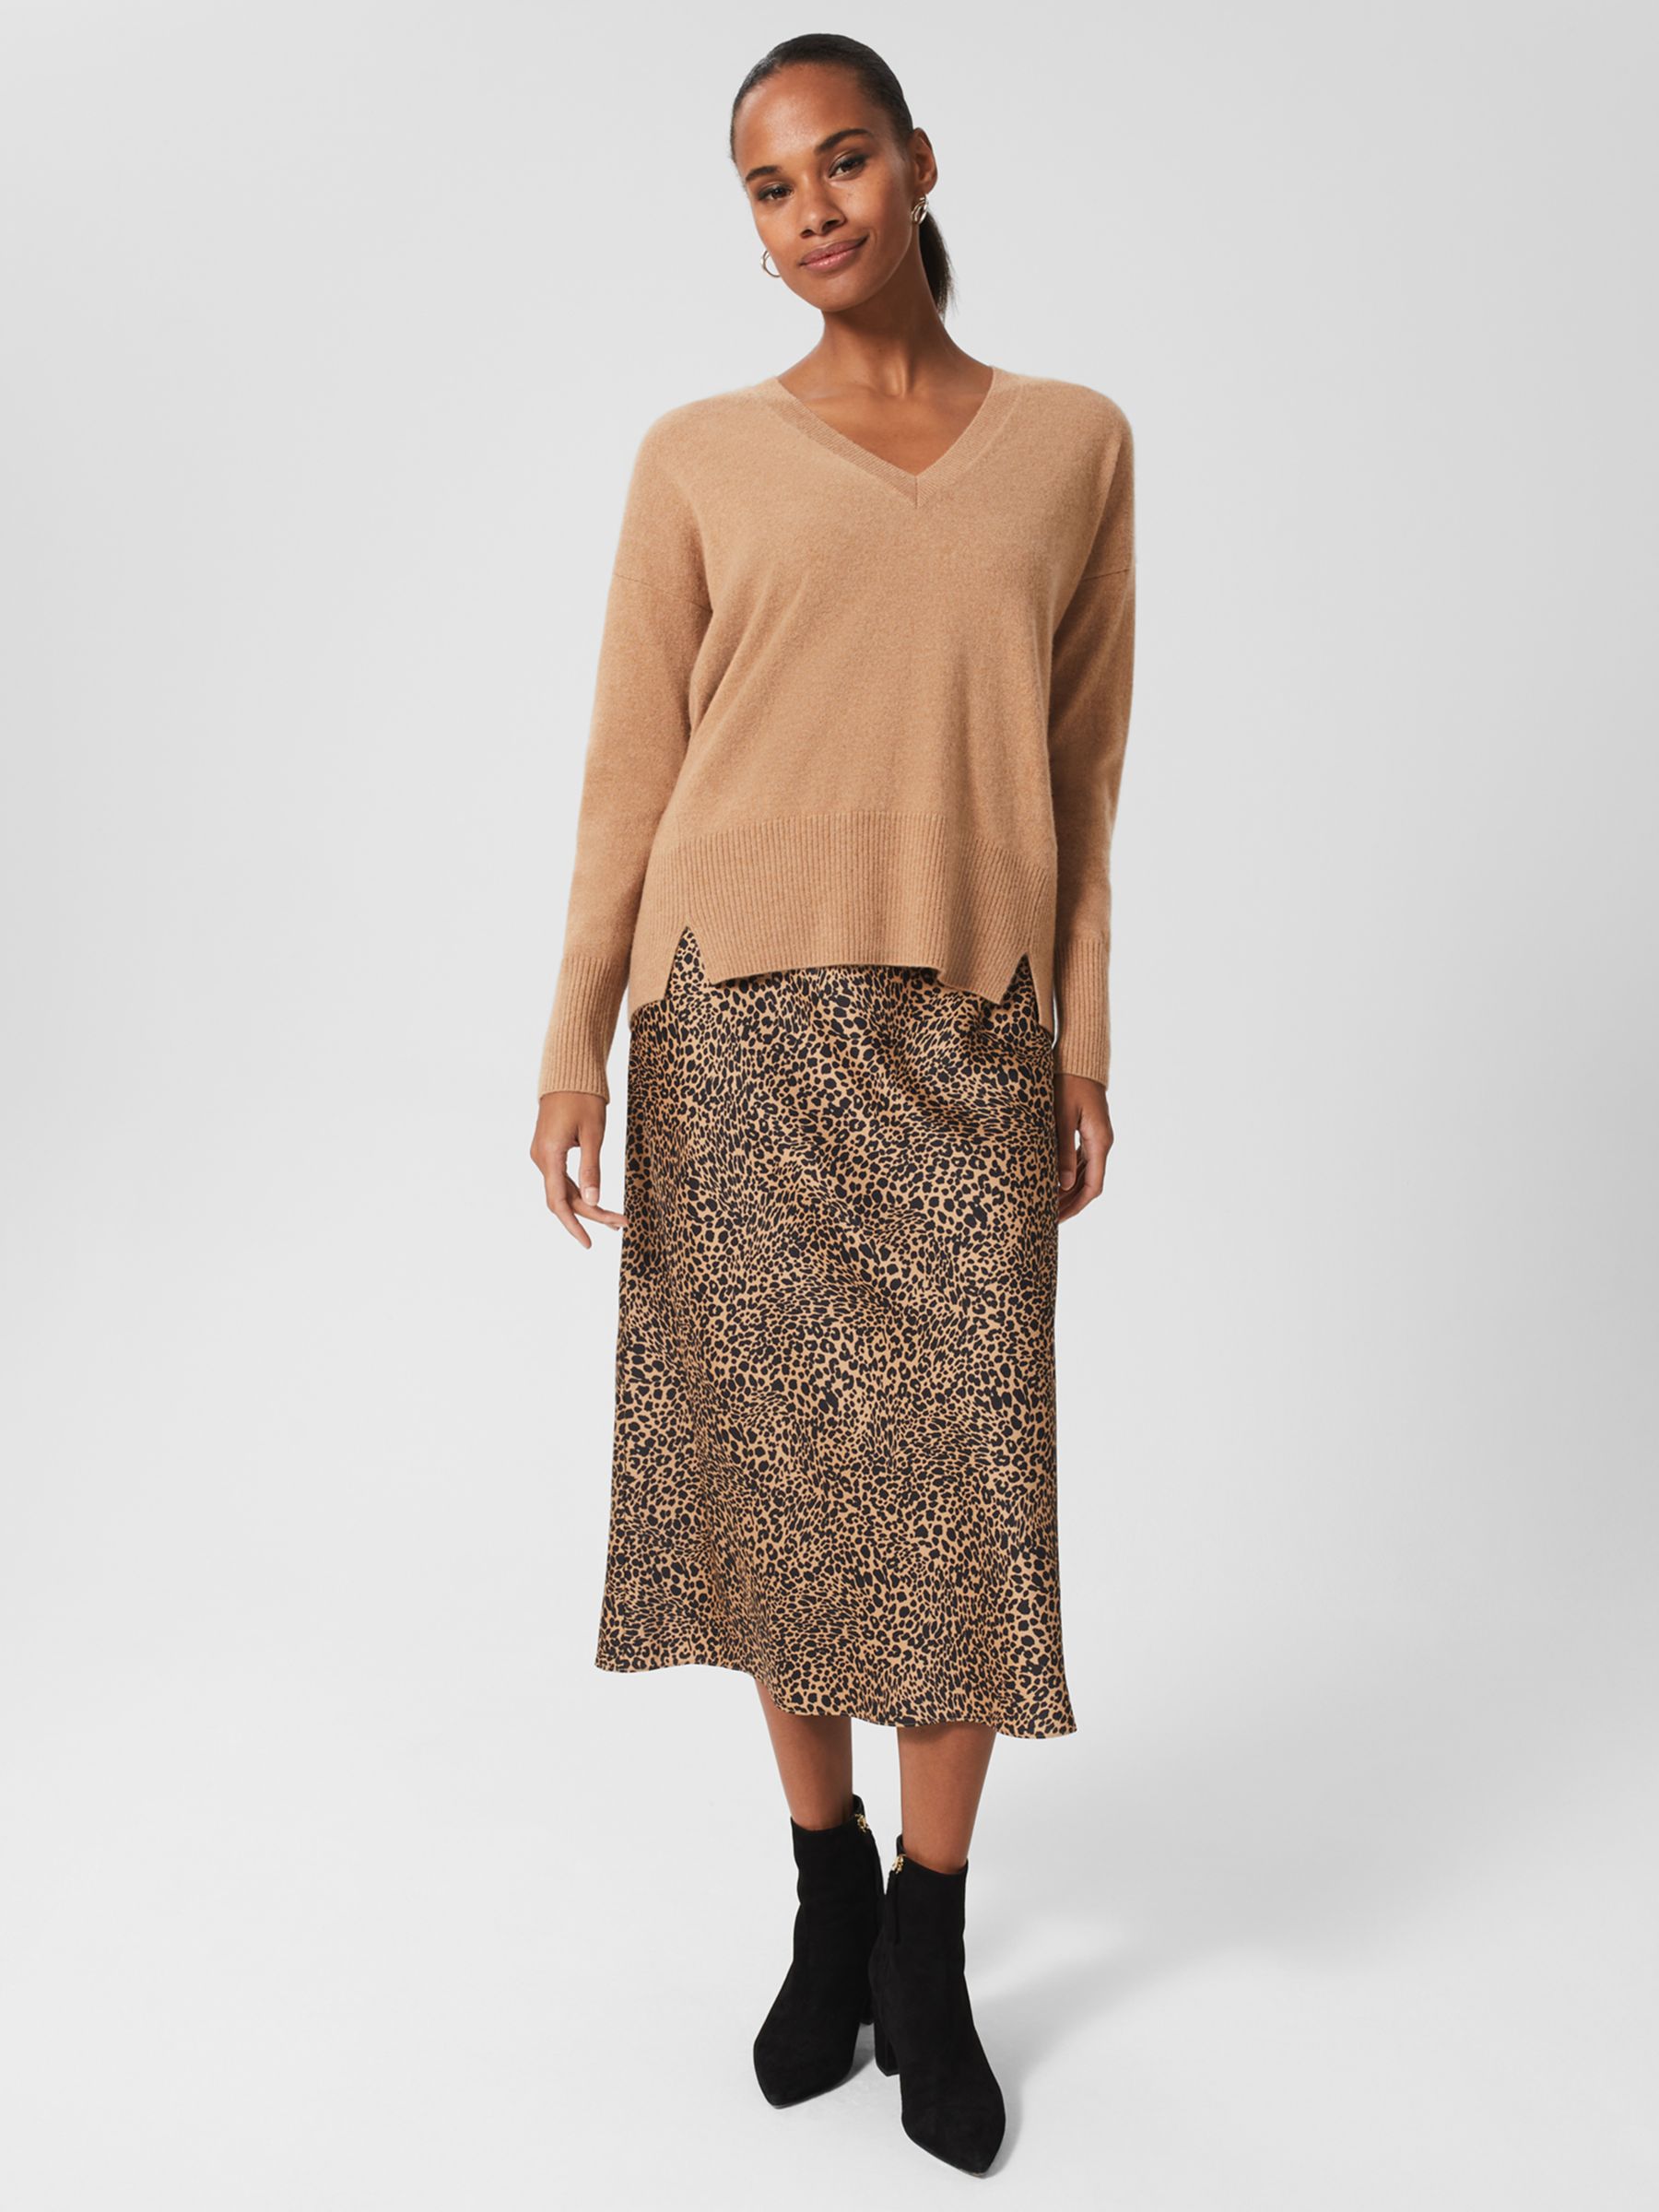 Hobbs Jas Leopard Print Skirt, Tan at John Lewis & Partners